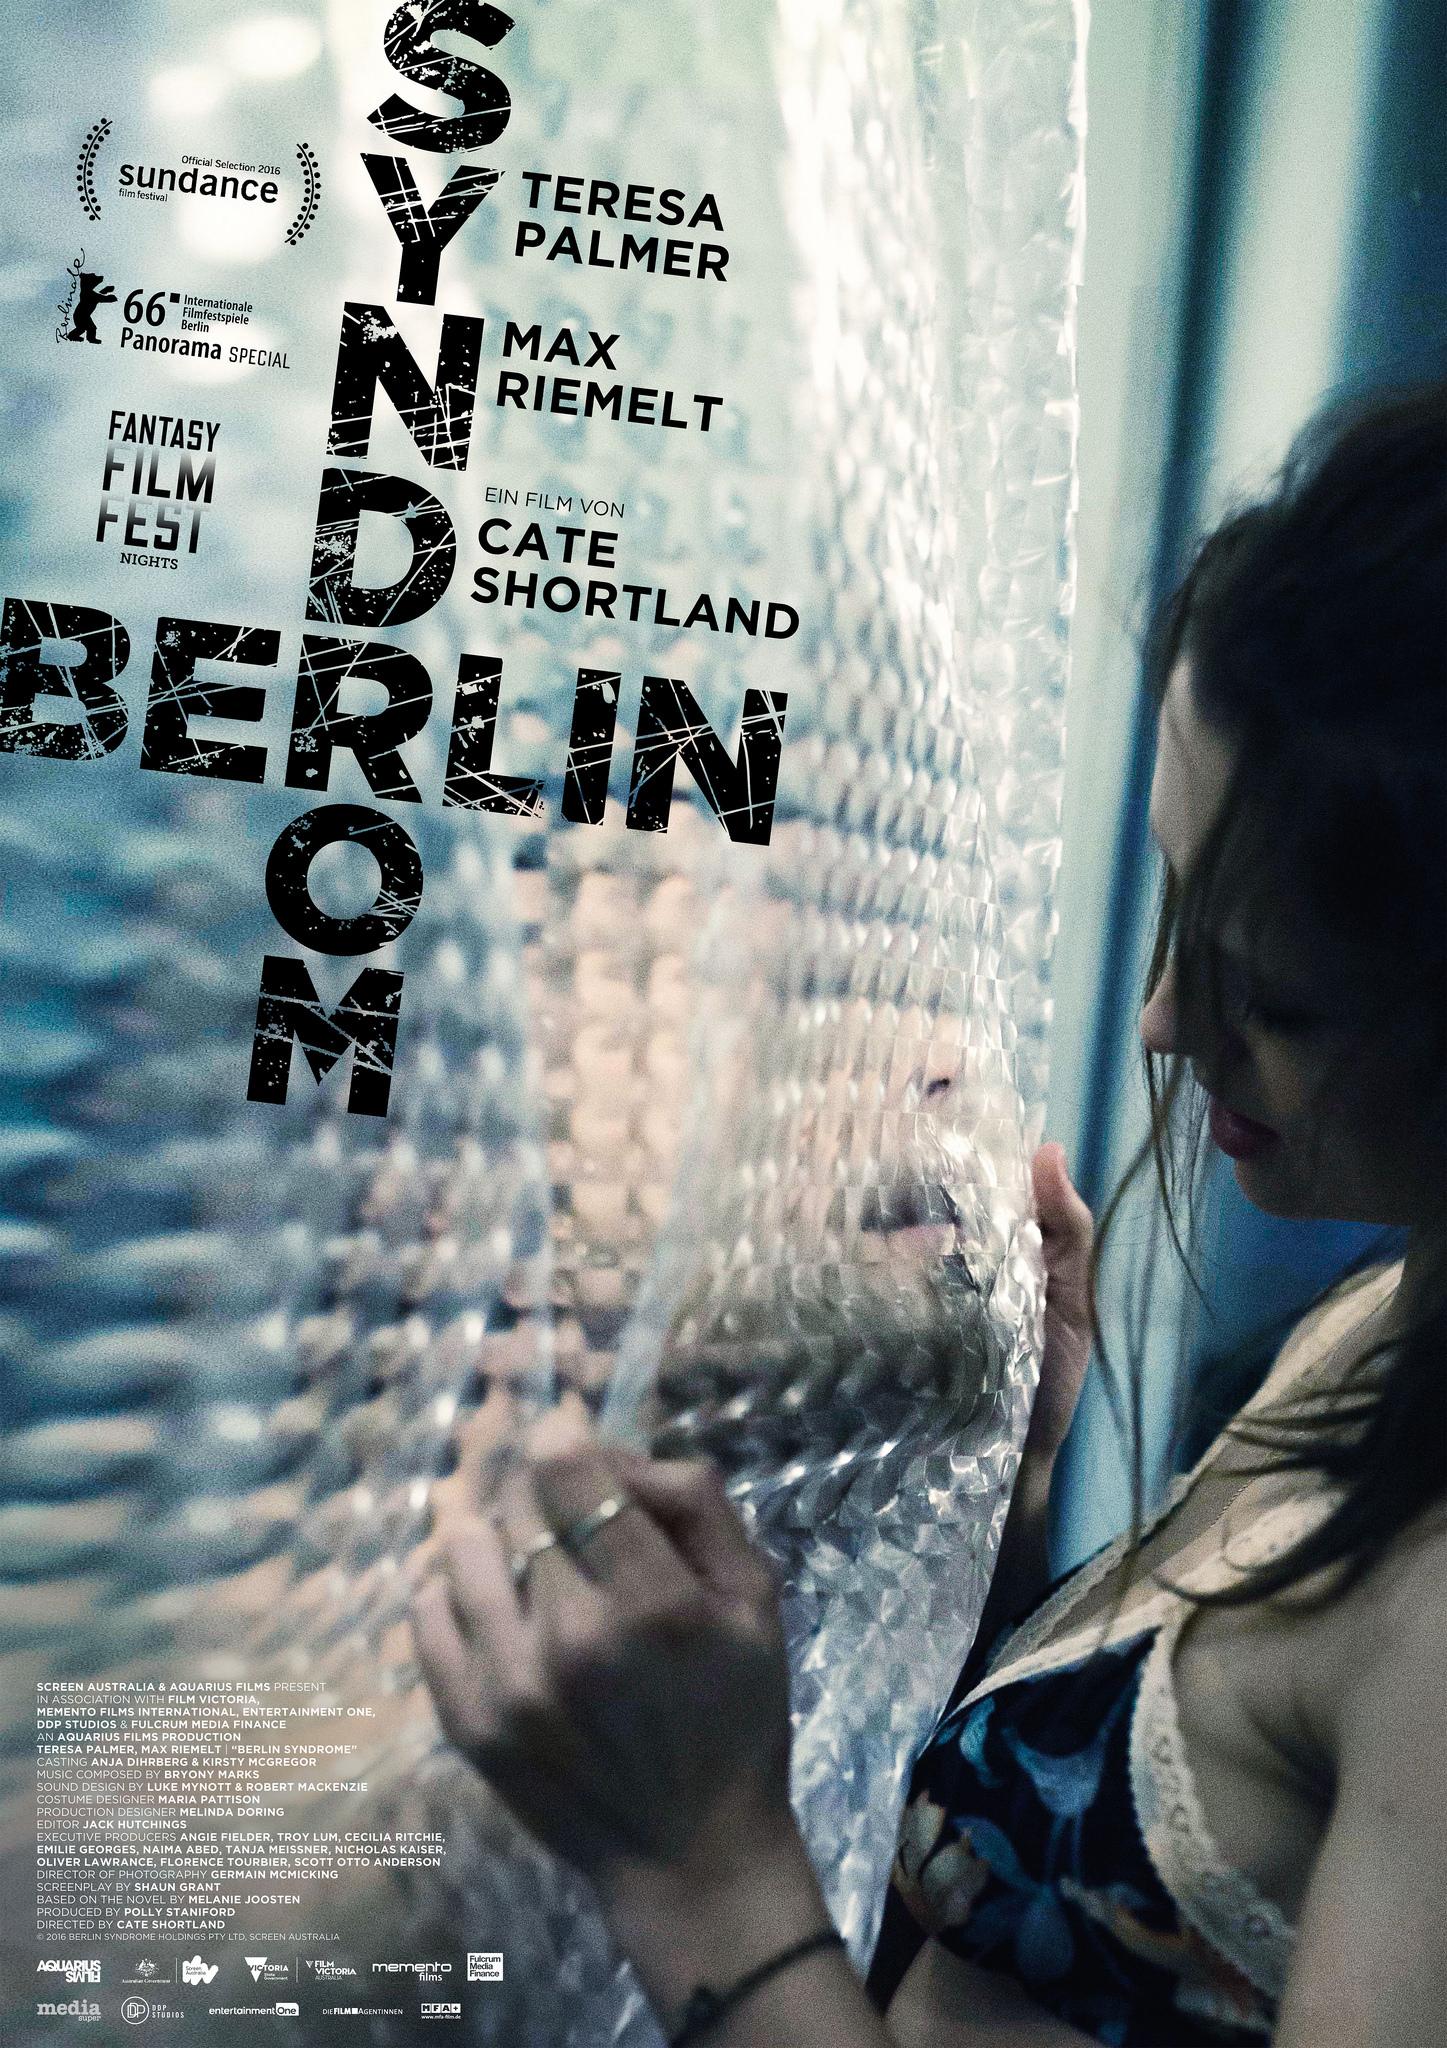 Постер фильма Берлинский синдром | Berlin Syndrome